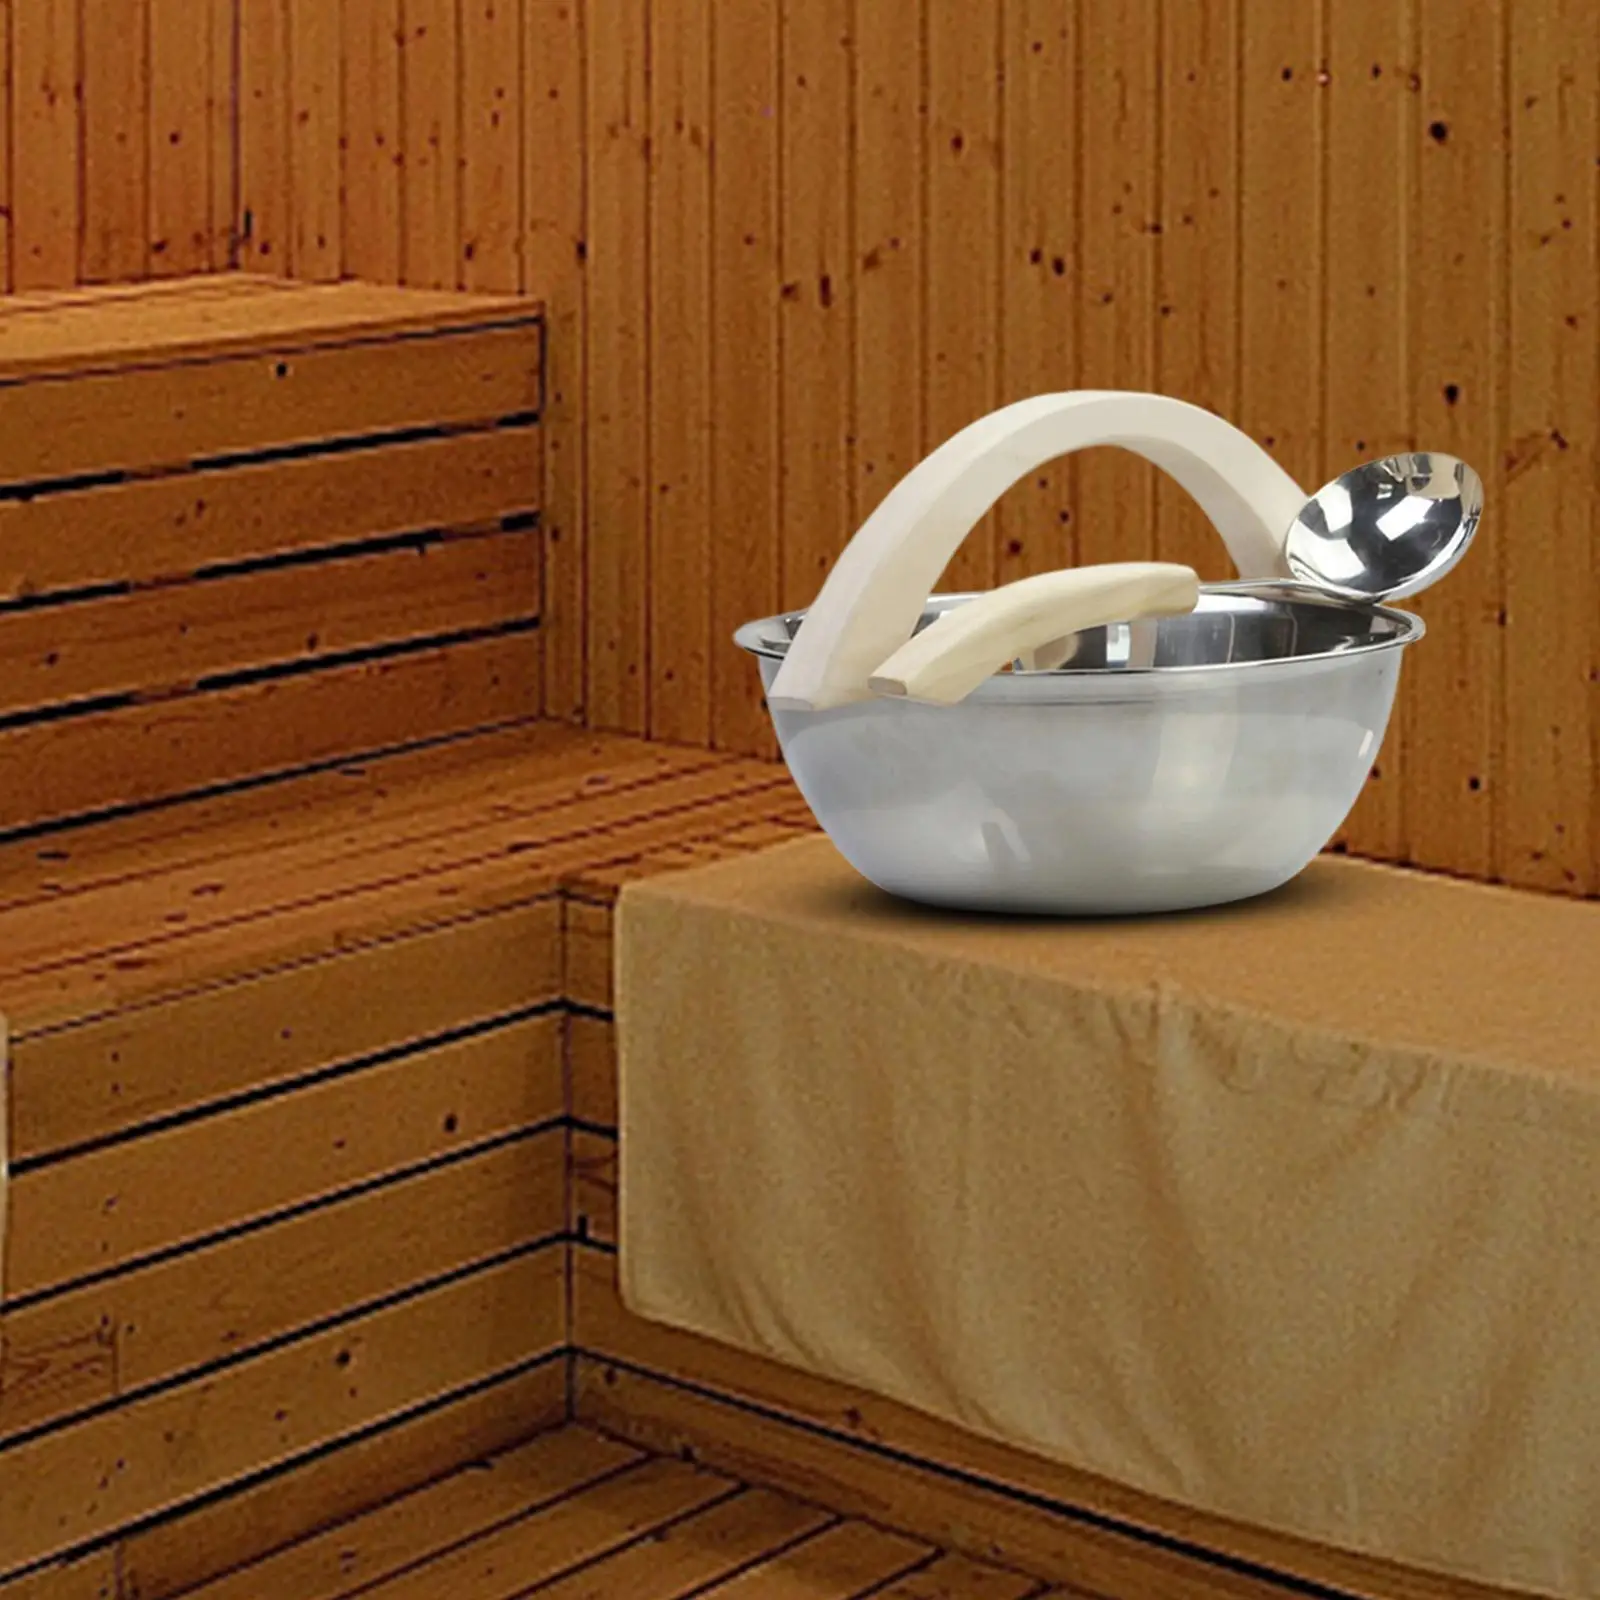 7L Sauna Bucket and Ladle Set Wooden Handles Accessories Strong and Durable Convenient Sauna Room Accessory